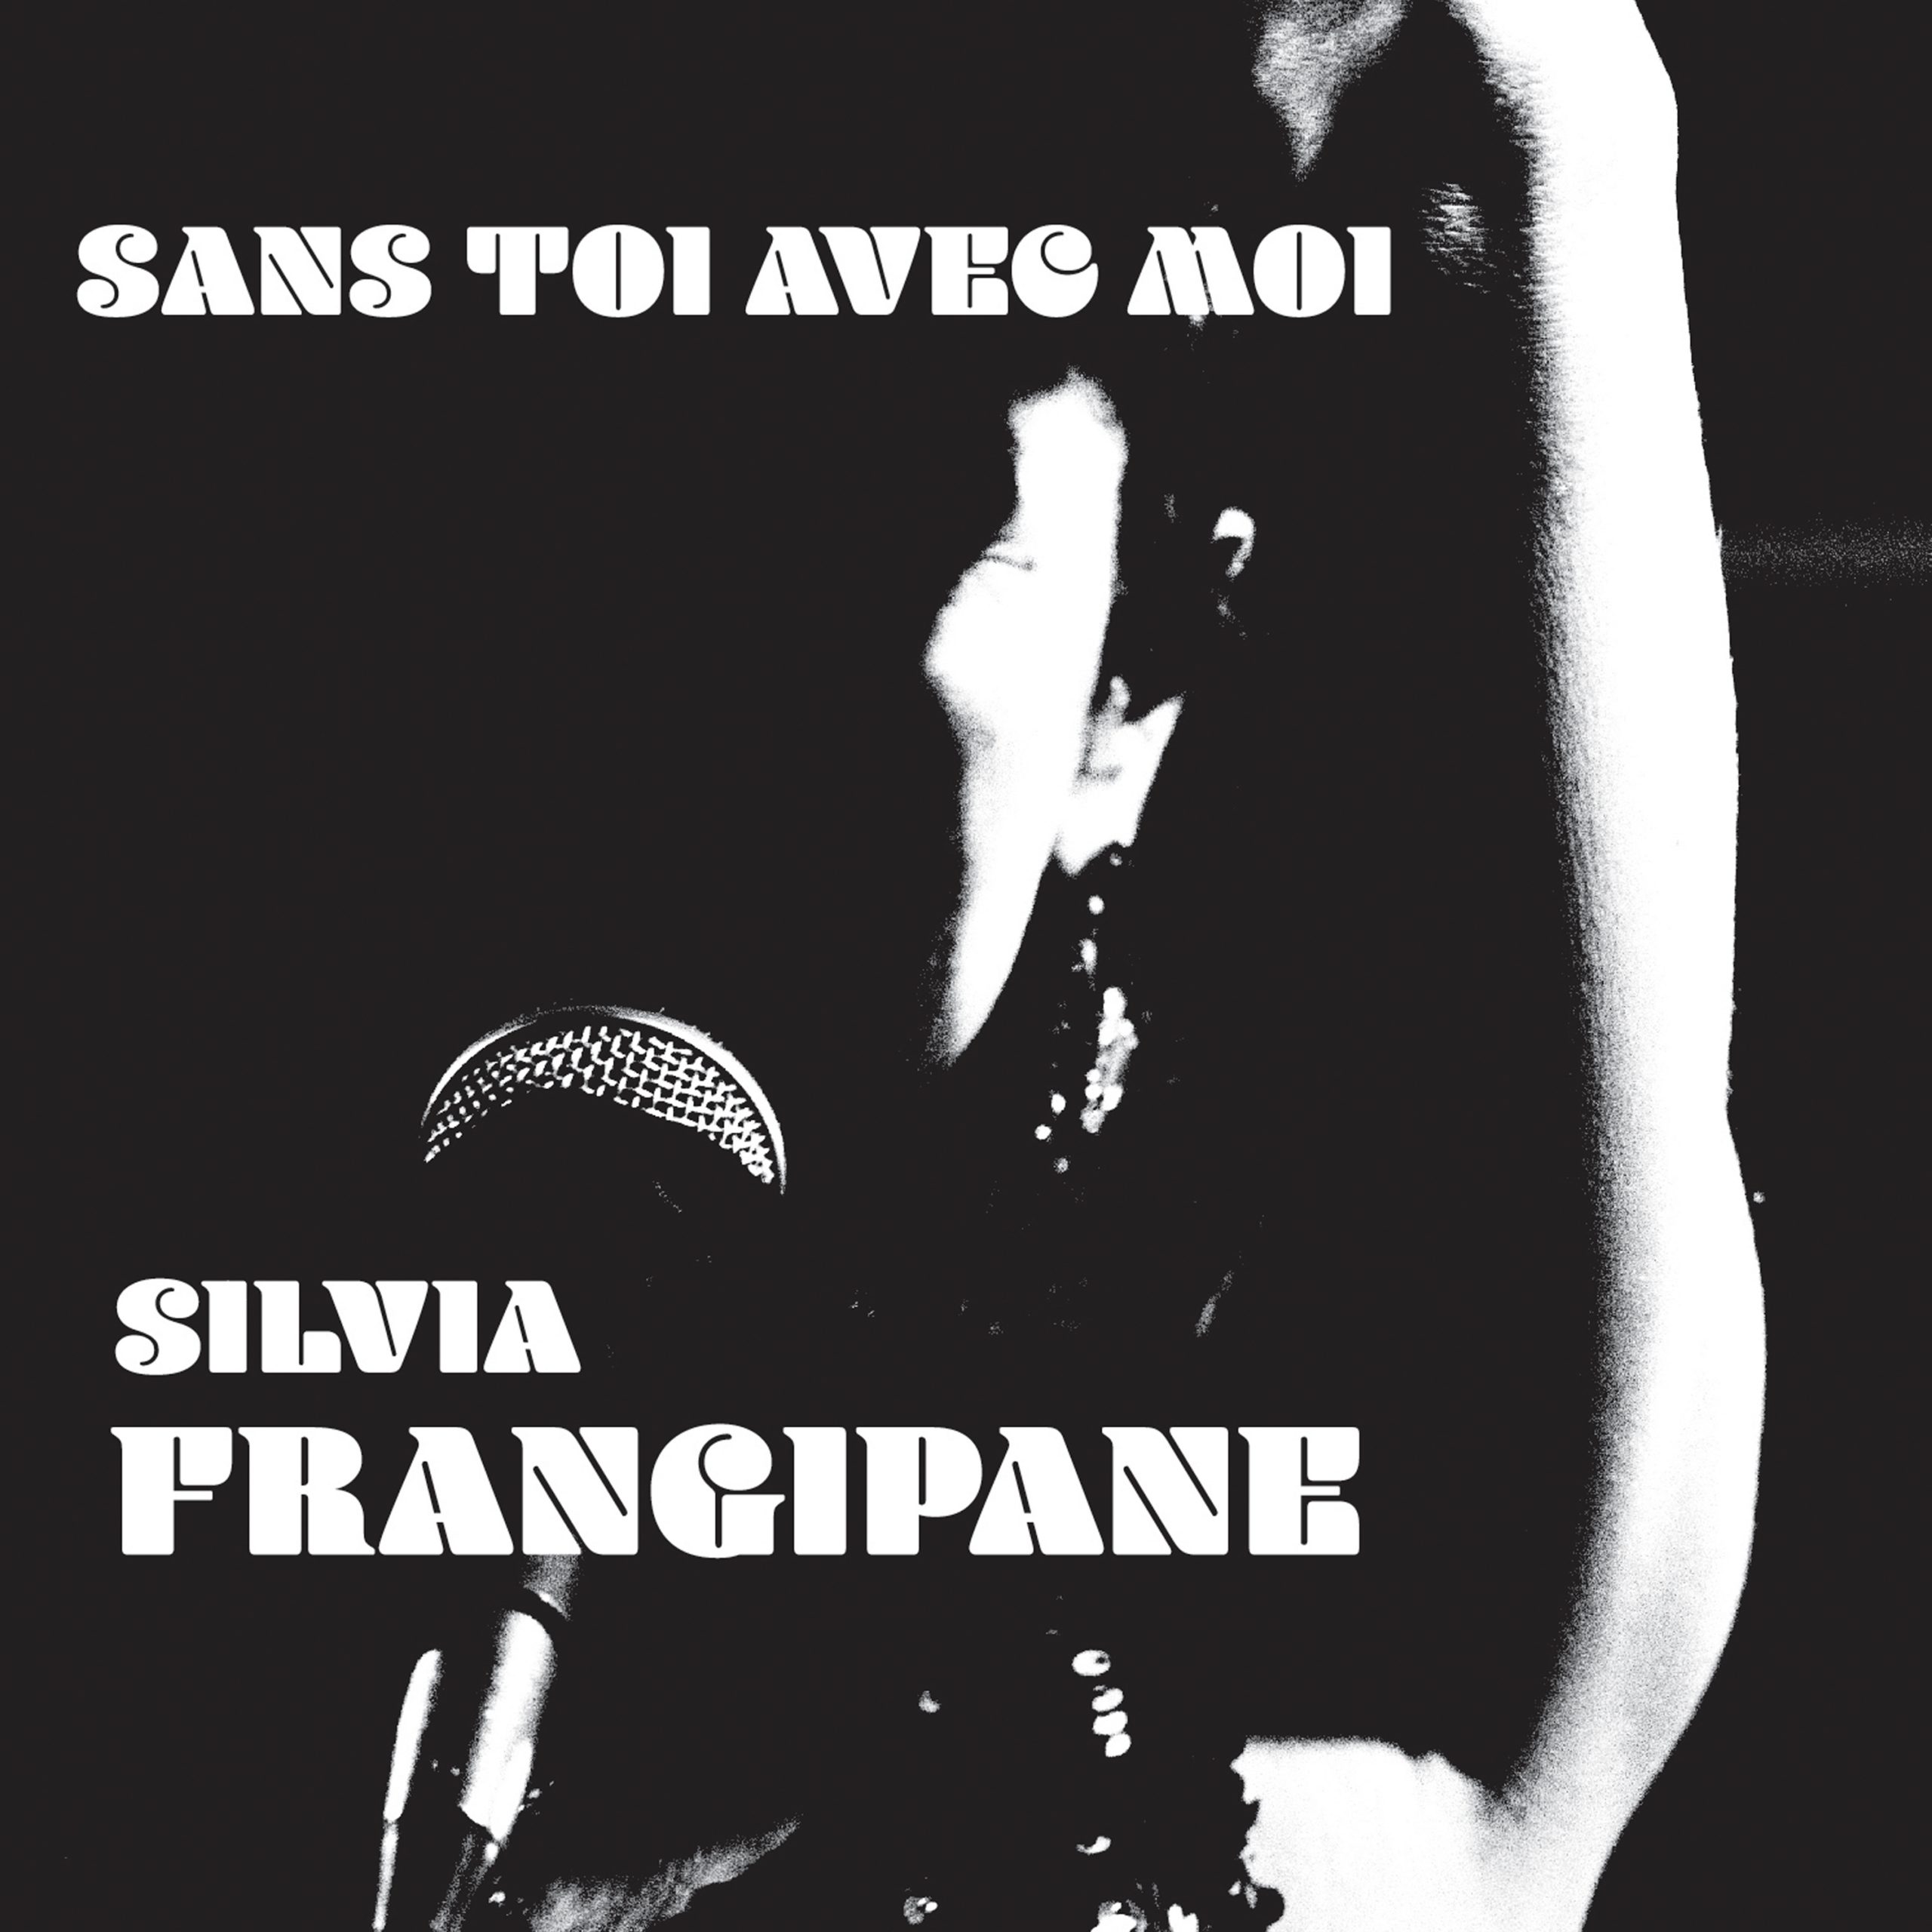 Silvia Frangipane – “Sans Toi Avec Moi”